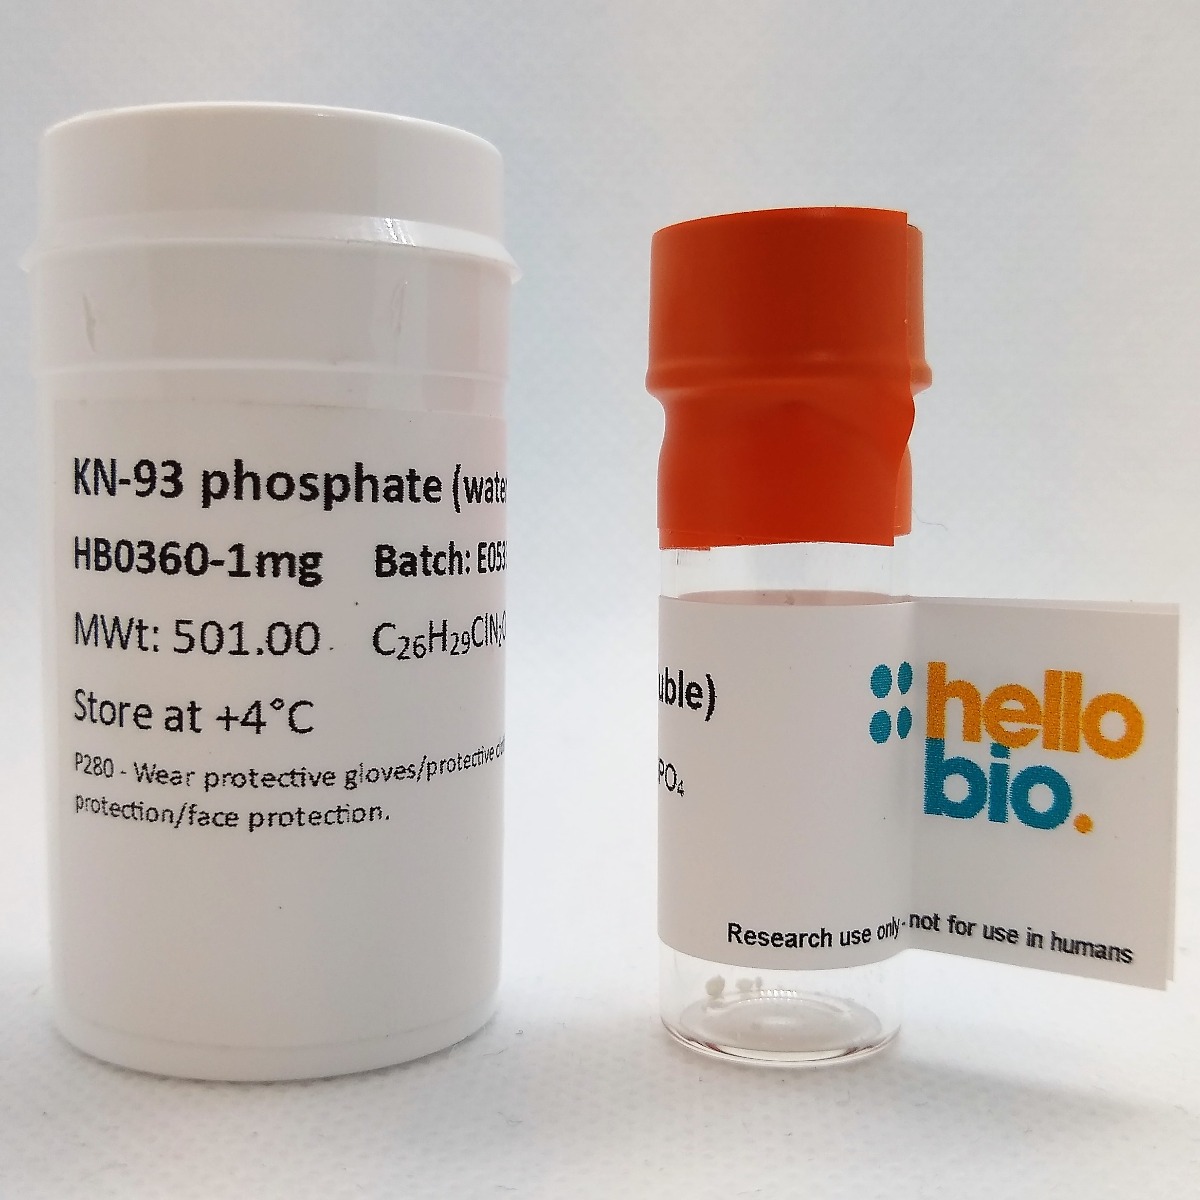 KN-93 phosphate (water soluble) product vial image | Hello Bio